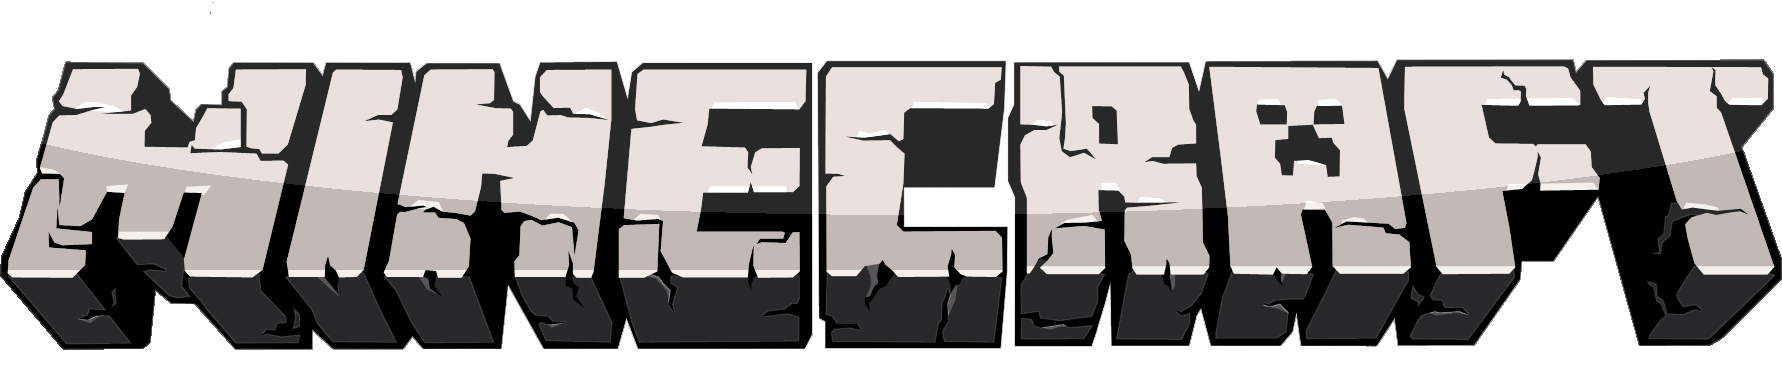 Minecraft java edition logo,minecraft logo free transparent png logos